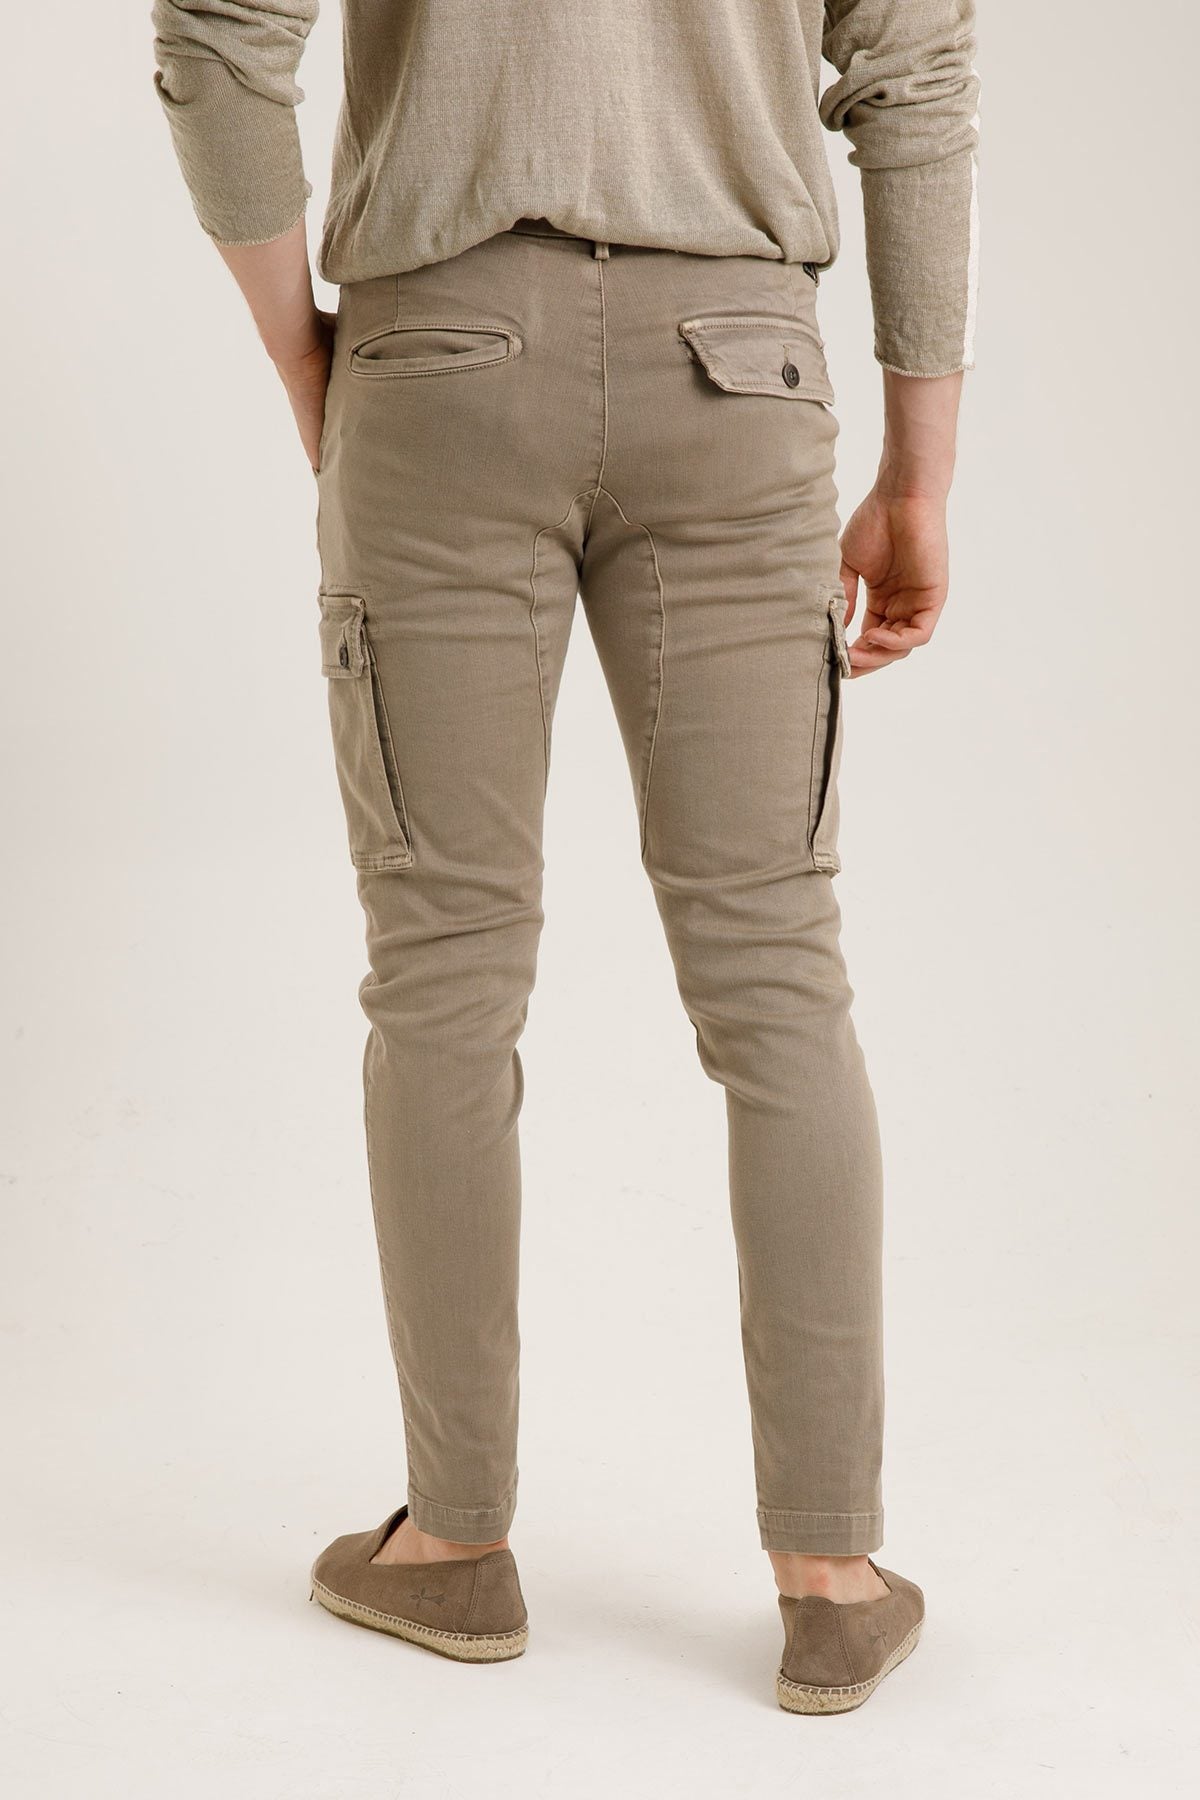 Replay Jaan Hyperflex Kargo Pantolon-Libas Trendy Fashion Store